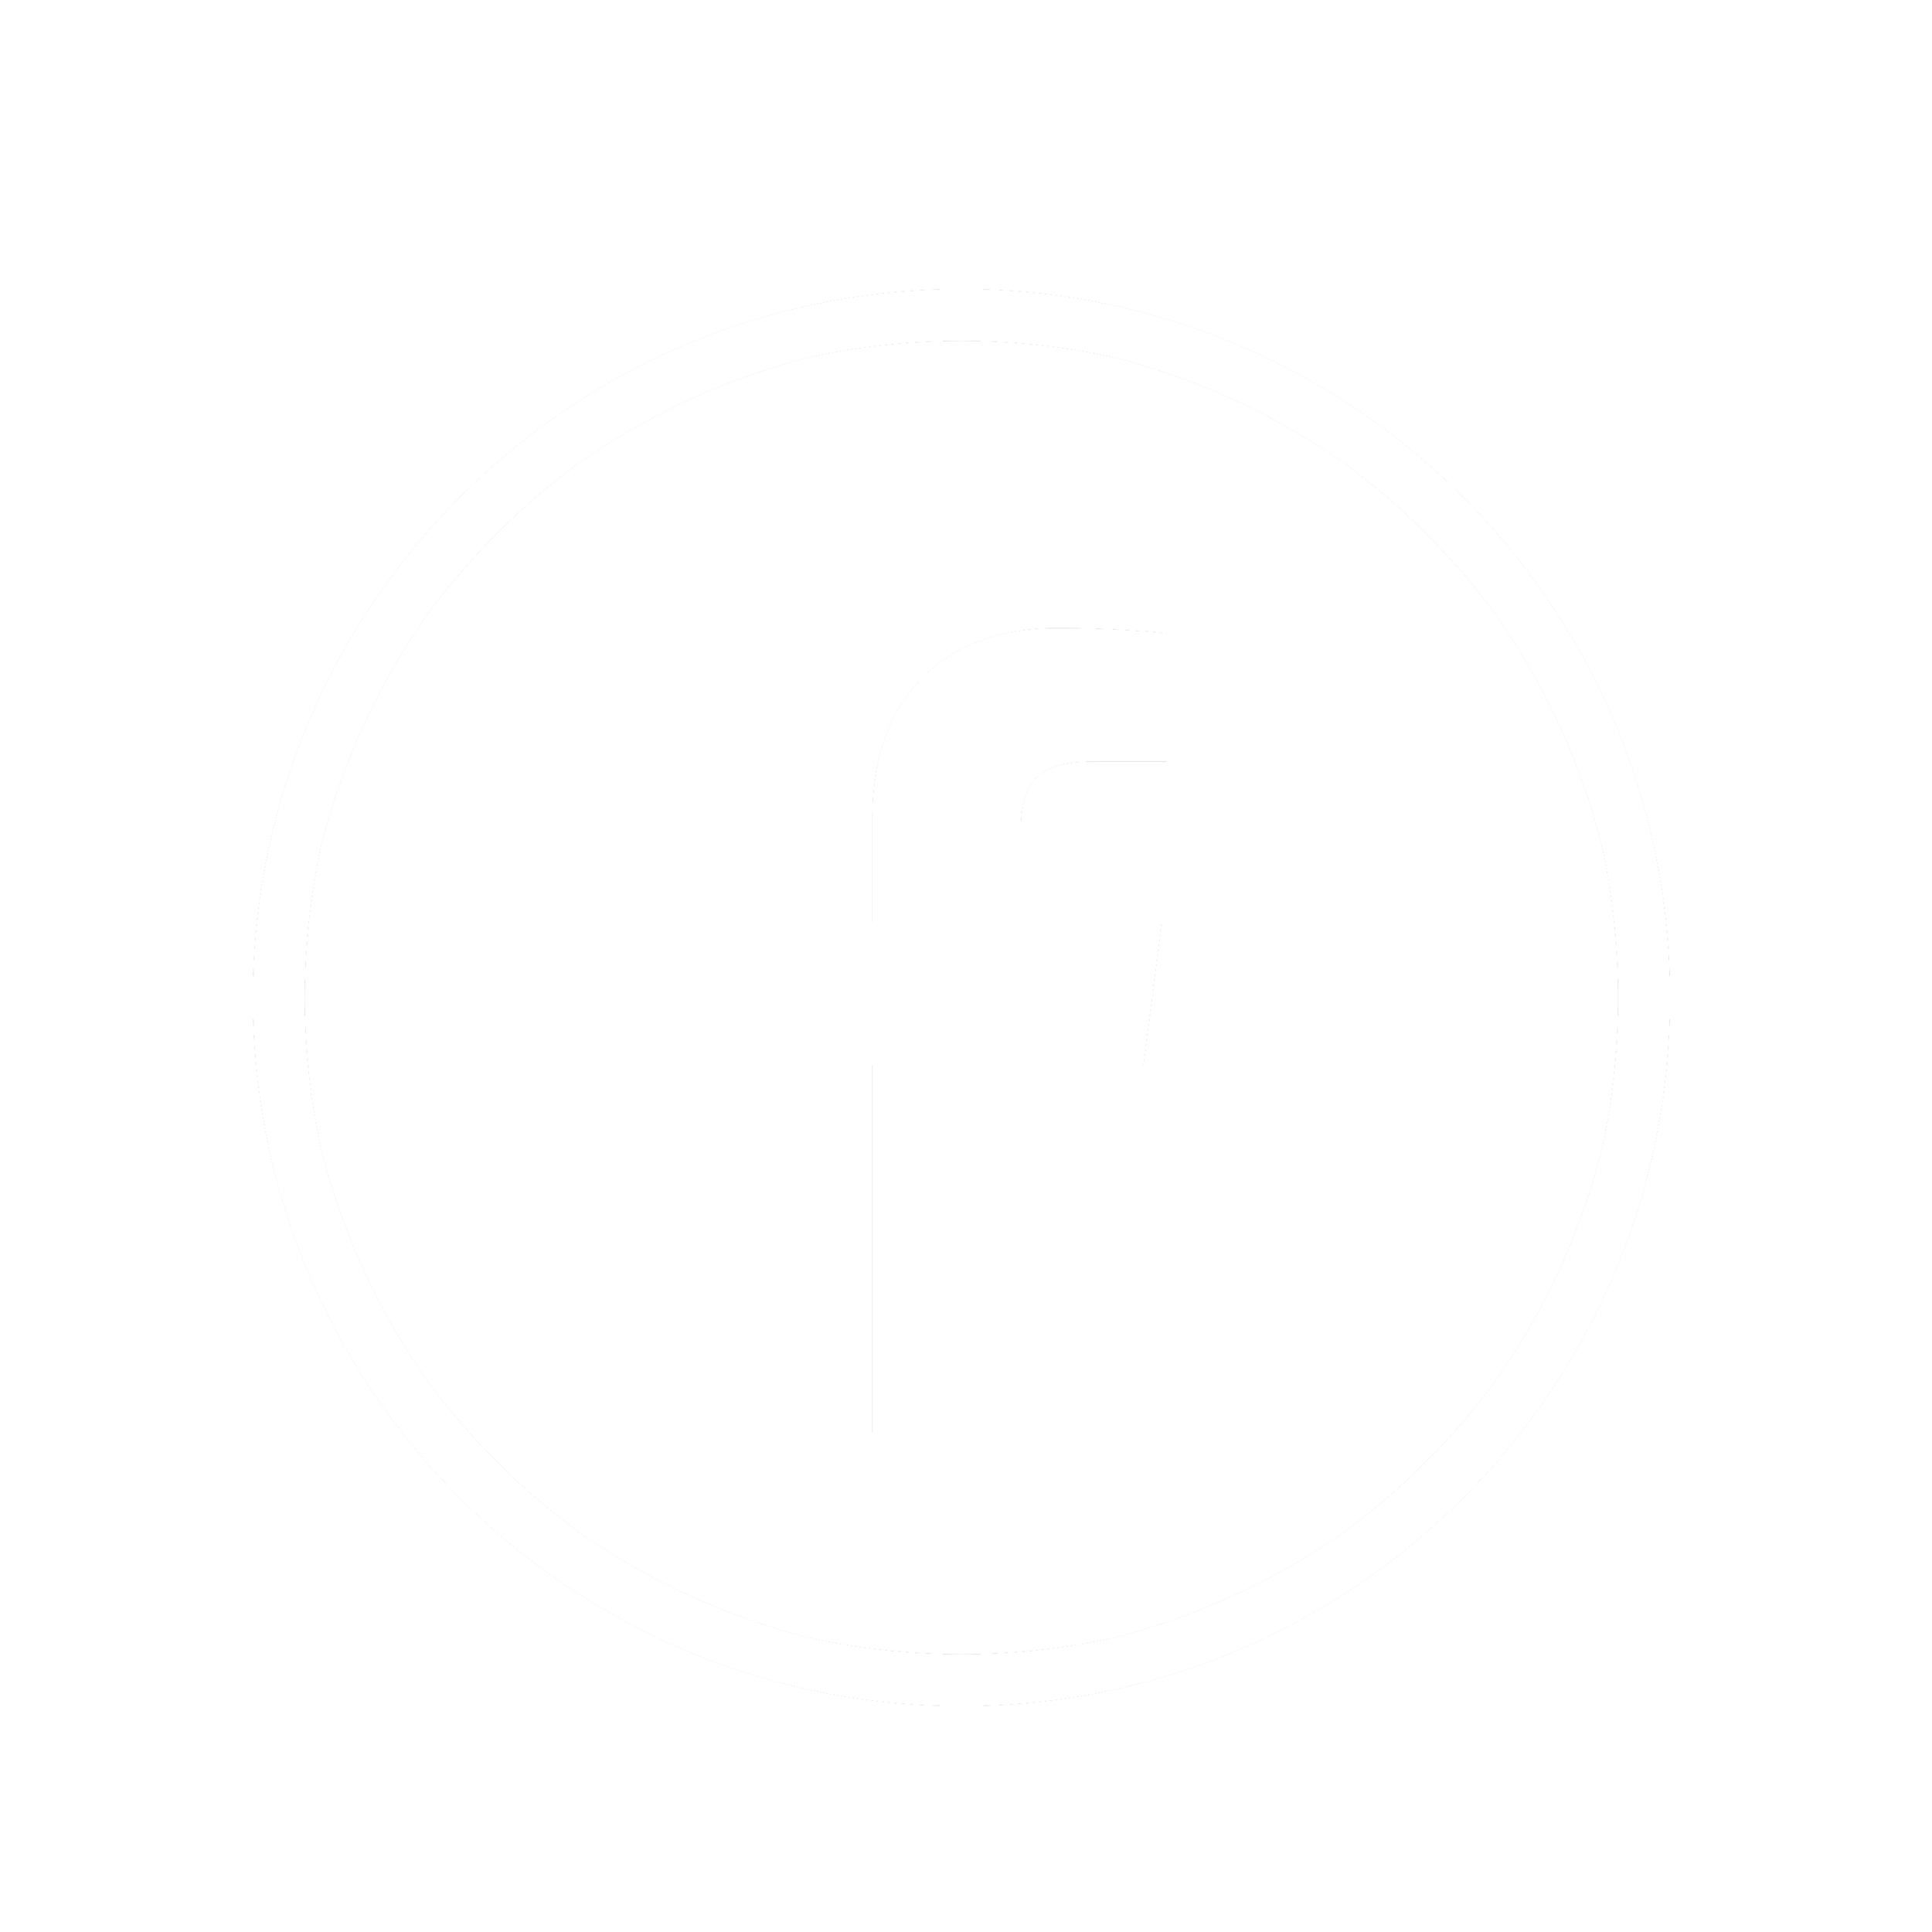 facebook-logo-white-2.png